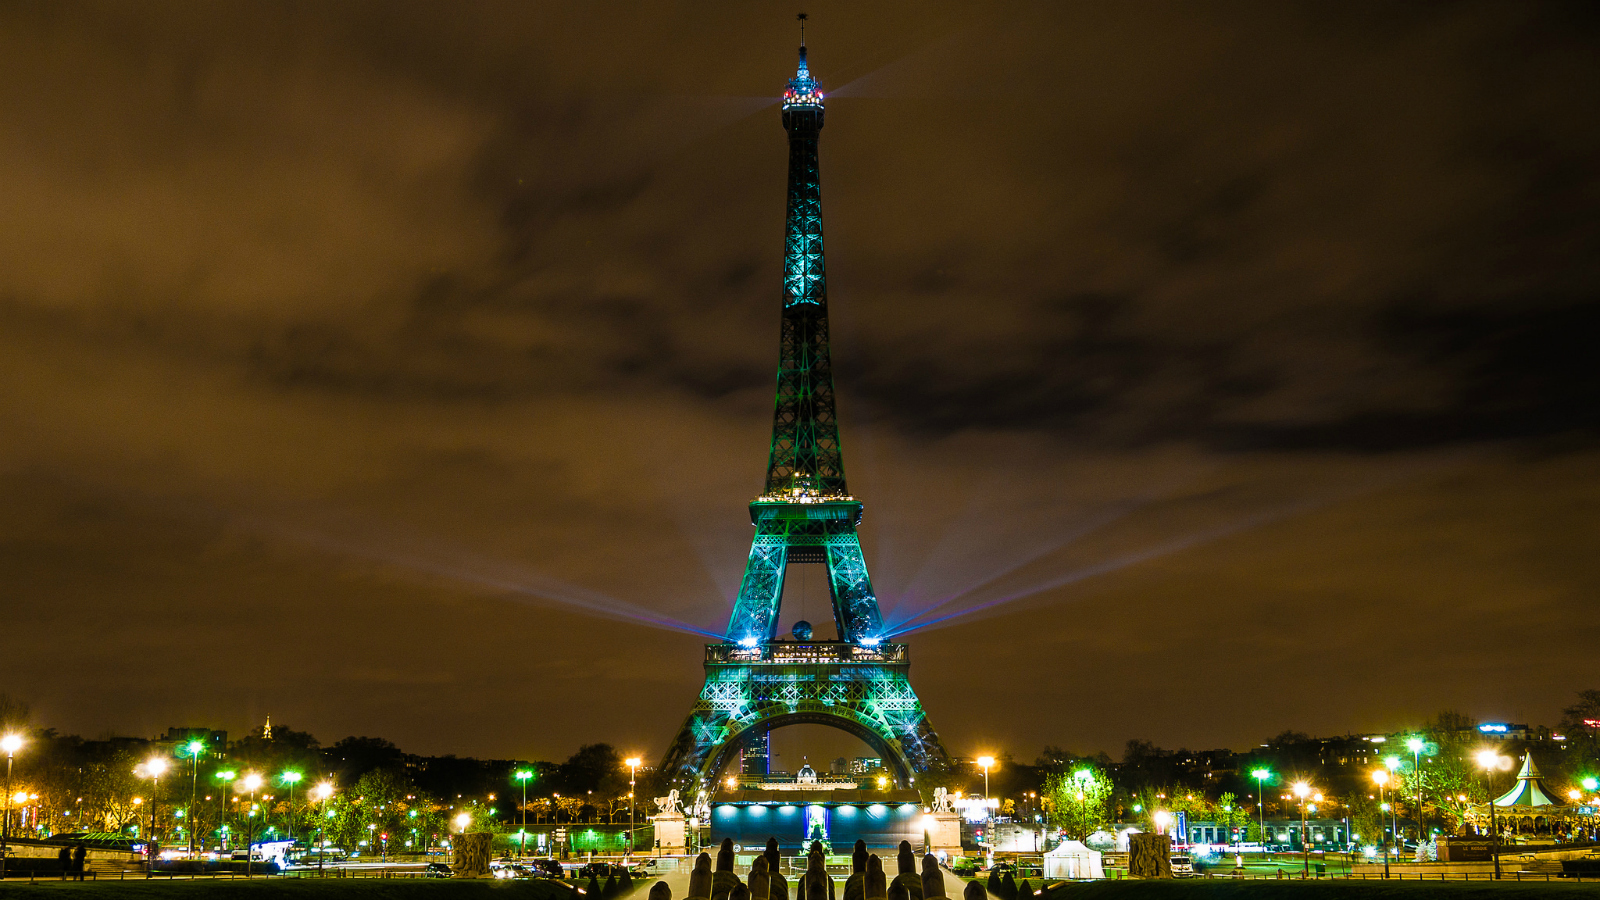 Eiffel Tower gone green